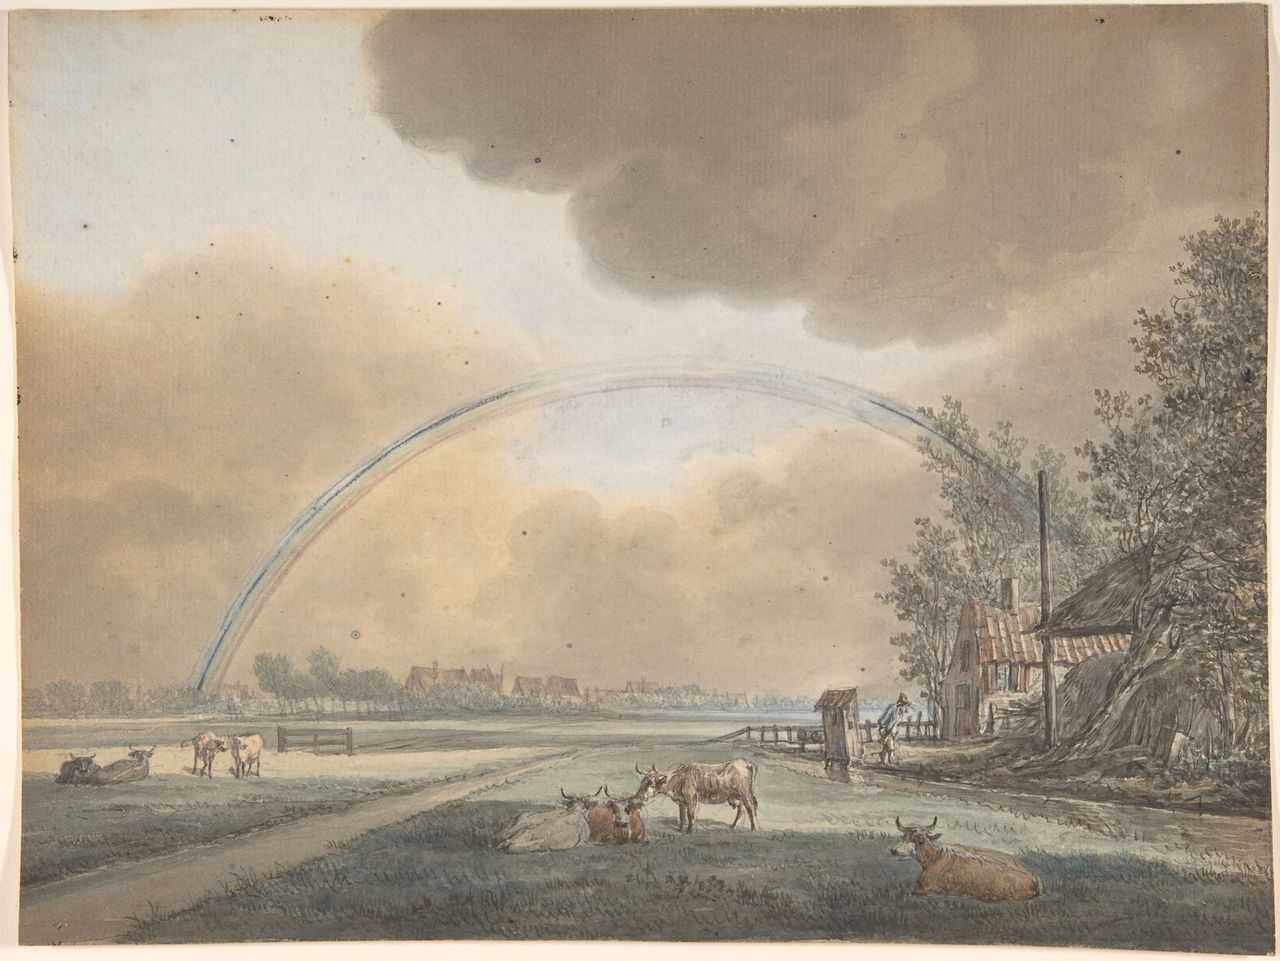 Landscape with a Rainbow over a Farmhouse and Distant Village n.d. Vincent Jansz. van der Vinne Dutch, Met Museum (article on anxiety quotes)